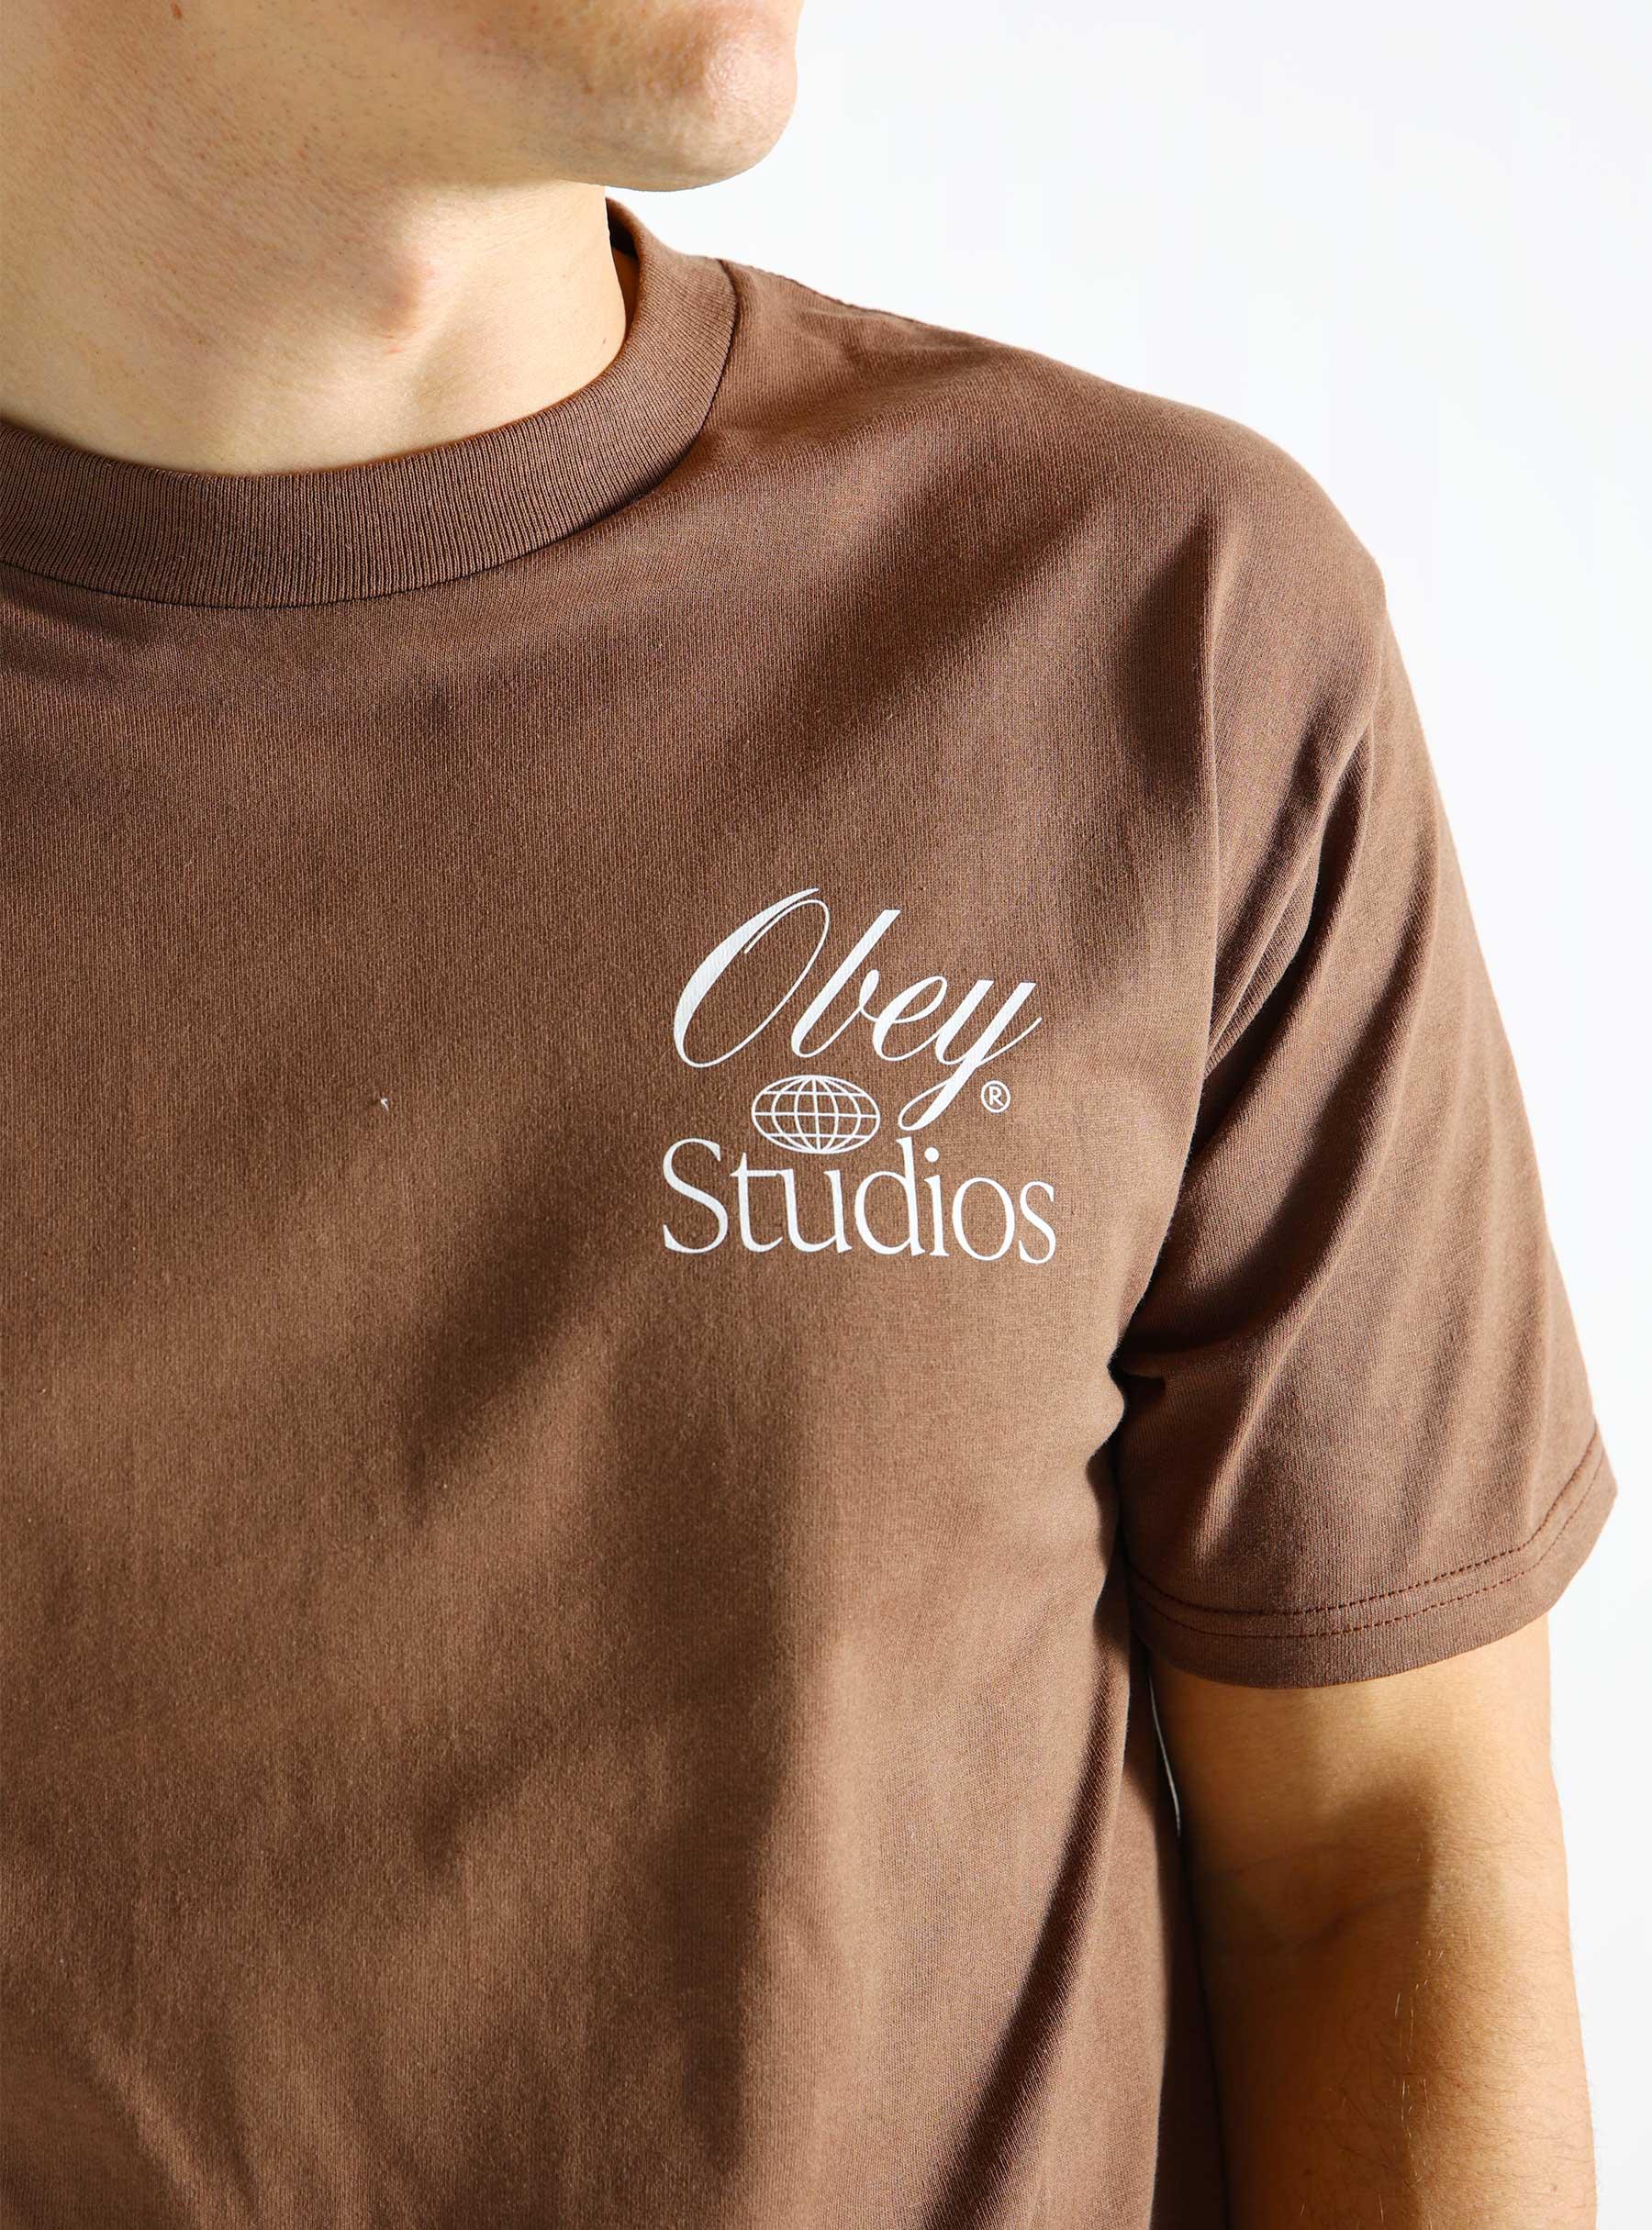 Obey Studios Worldwide T-shirt Silt 165263708-SLT